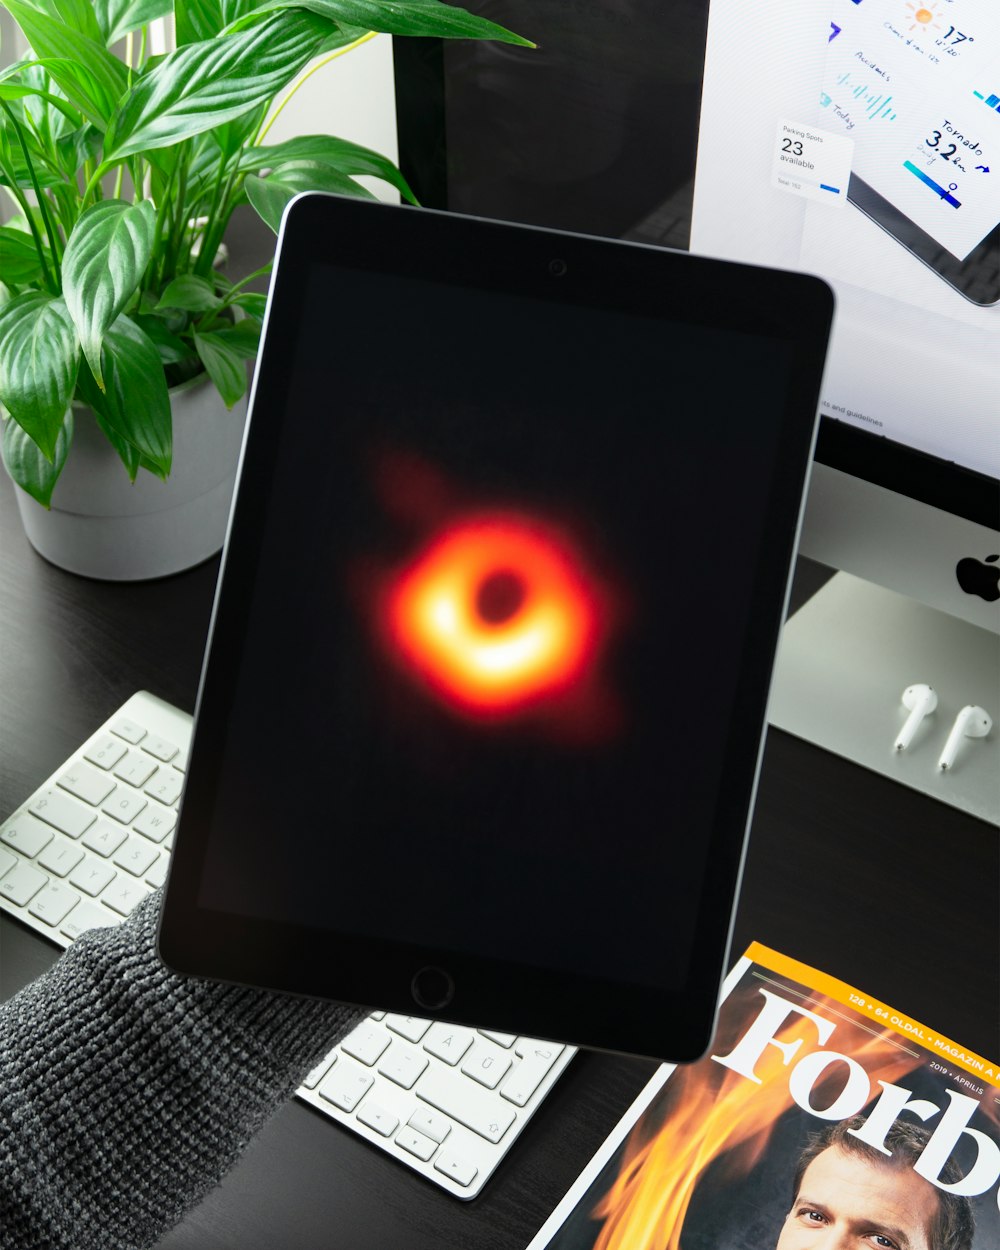 iPad displaying red circle